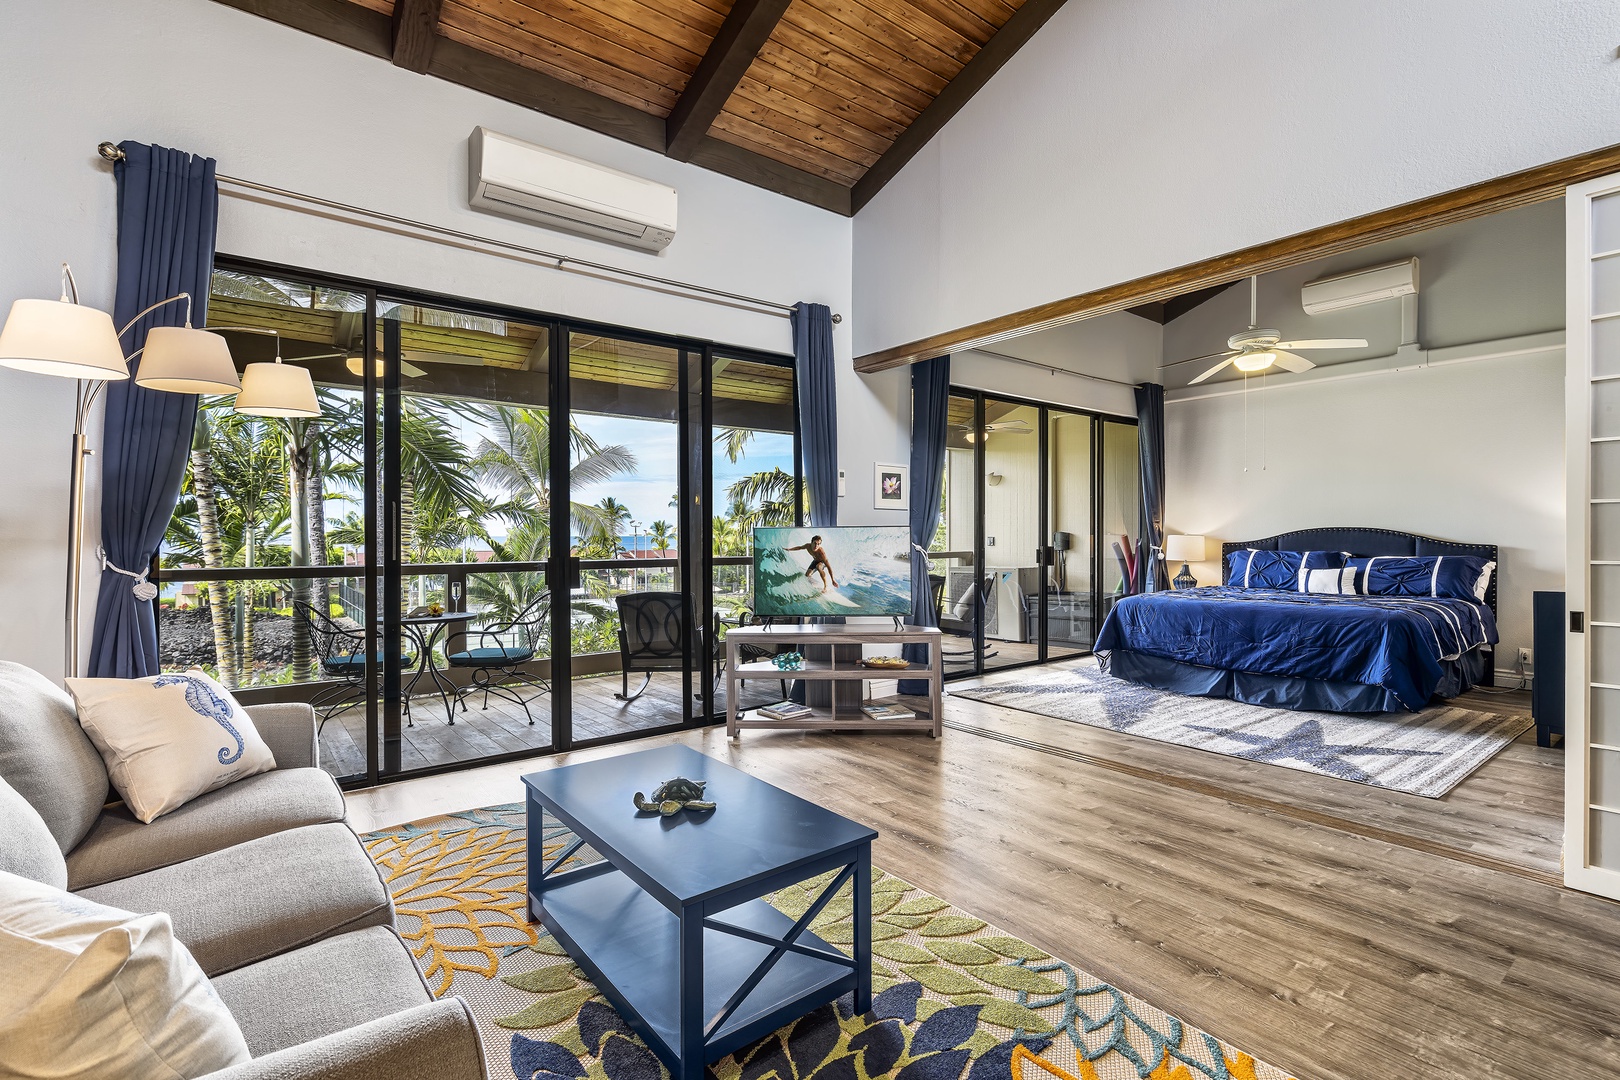 Kailua Kona Vacation Rentals, Keauhou Kona Surf & Racquet 9303 - Living room looking towards the primary bedroom with sliding doors